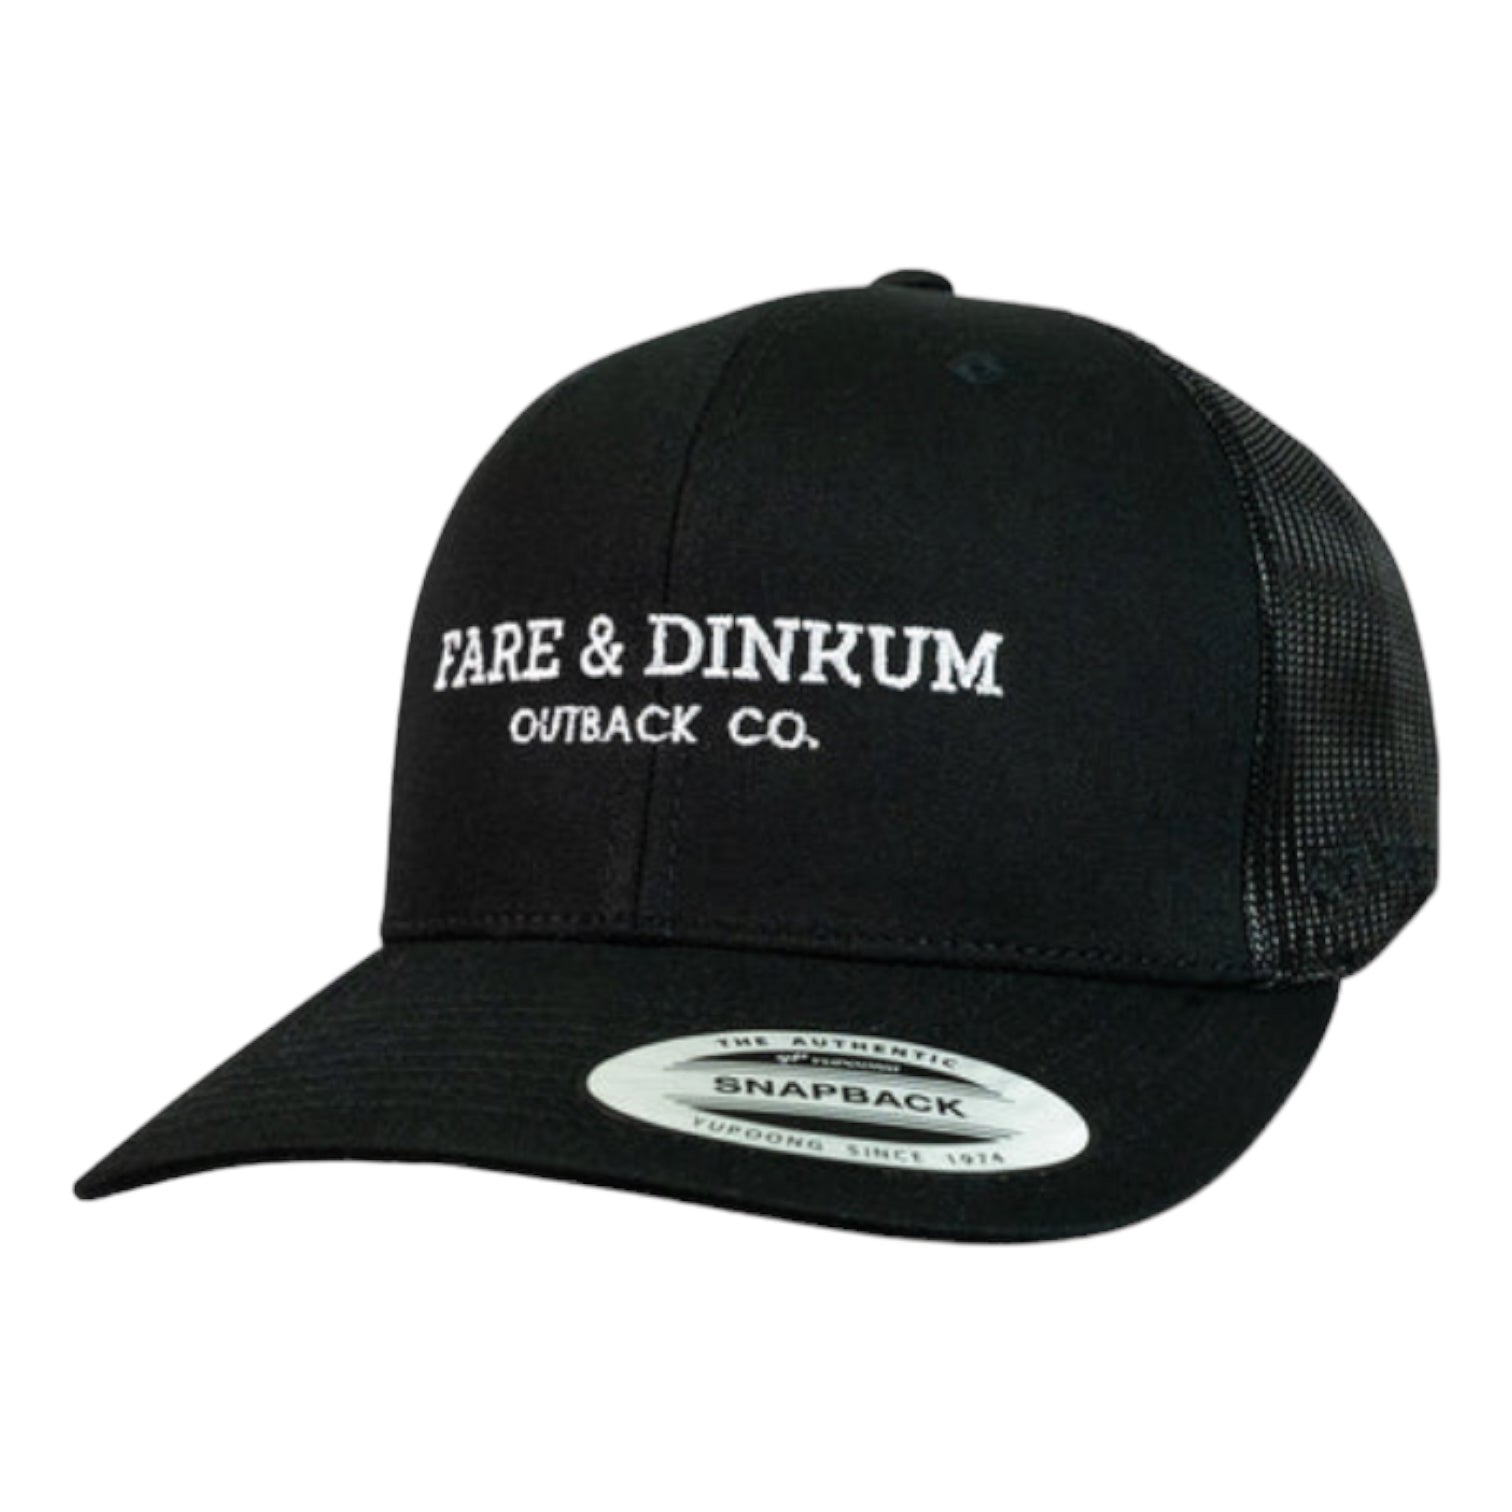 Fare & Dinkum Black Trucker Cap